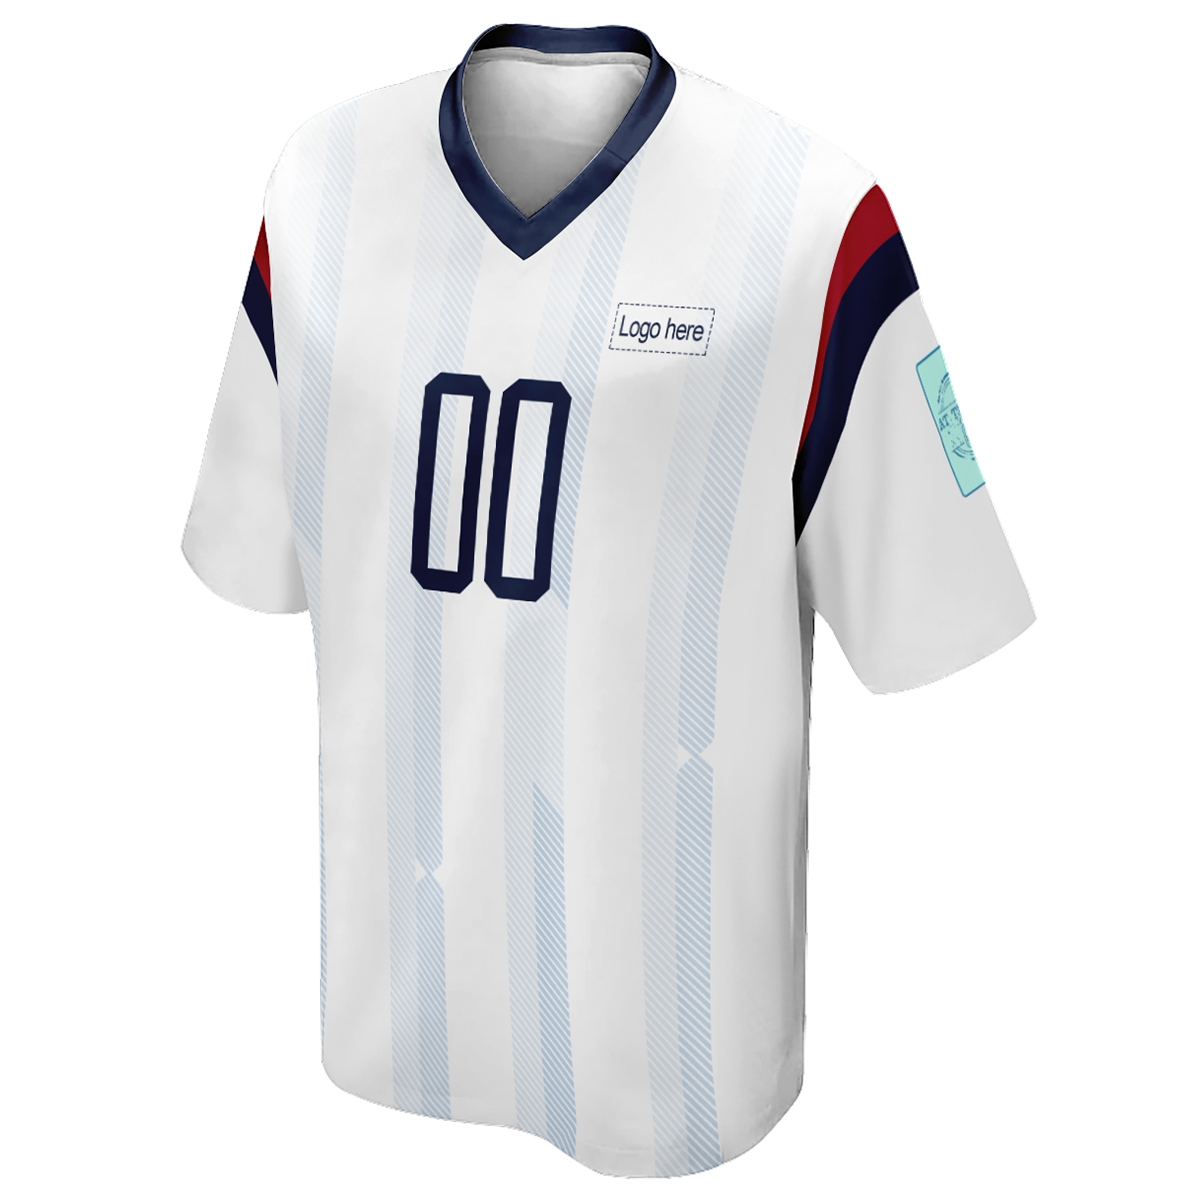 Men's Custom South Korea World Cup Soccer Jerseys With Logo